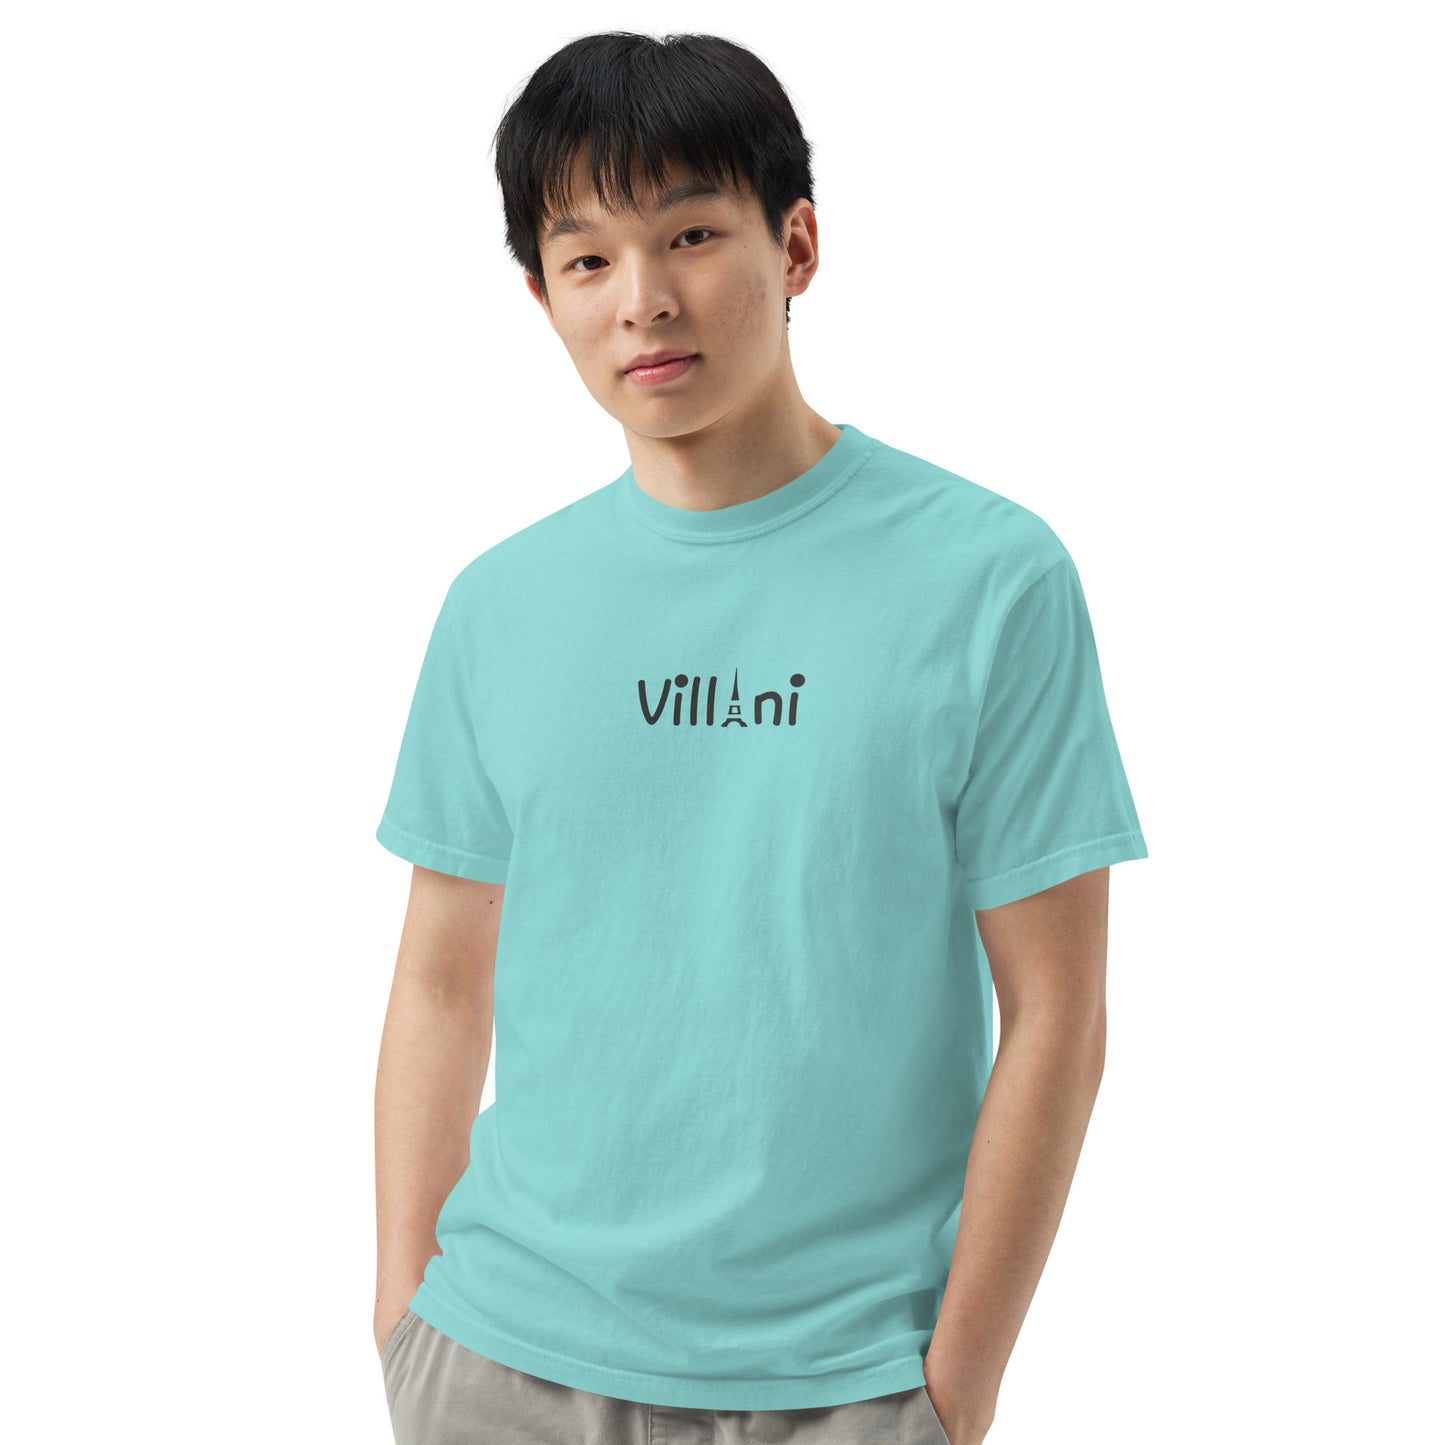 Villani "Love Win"